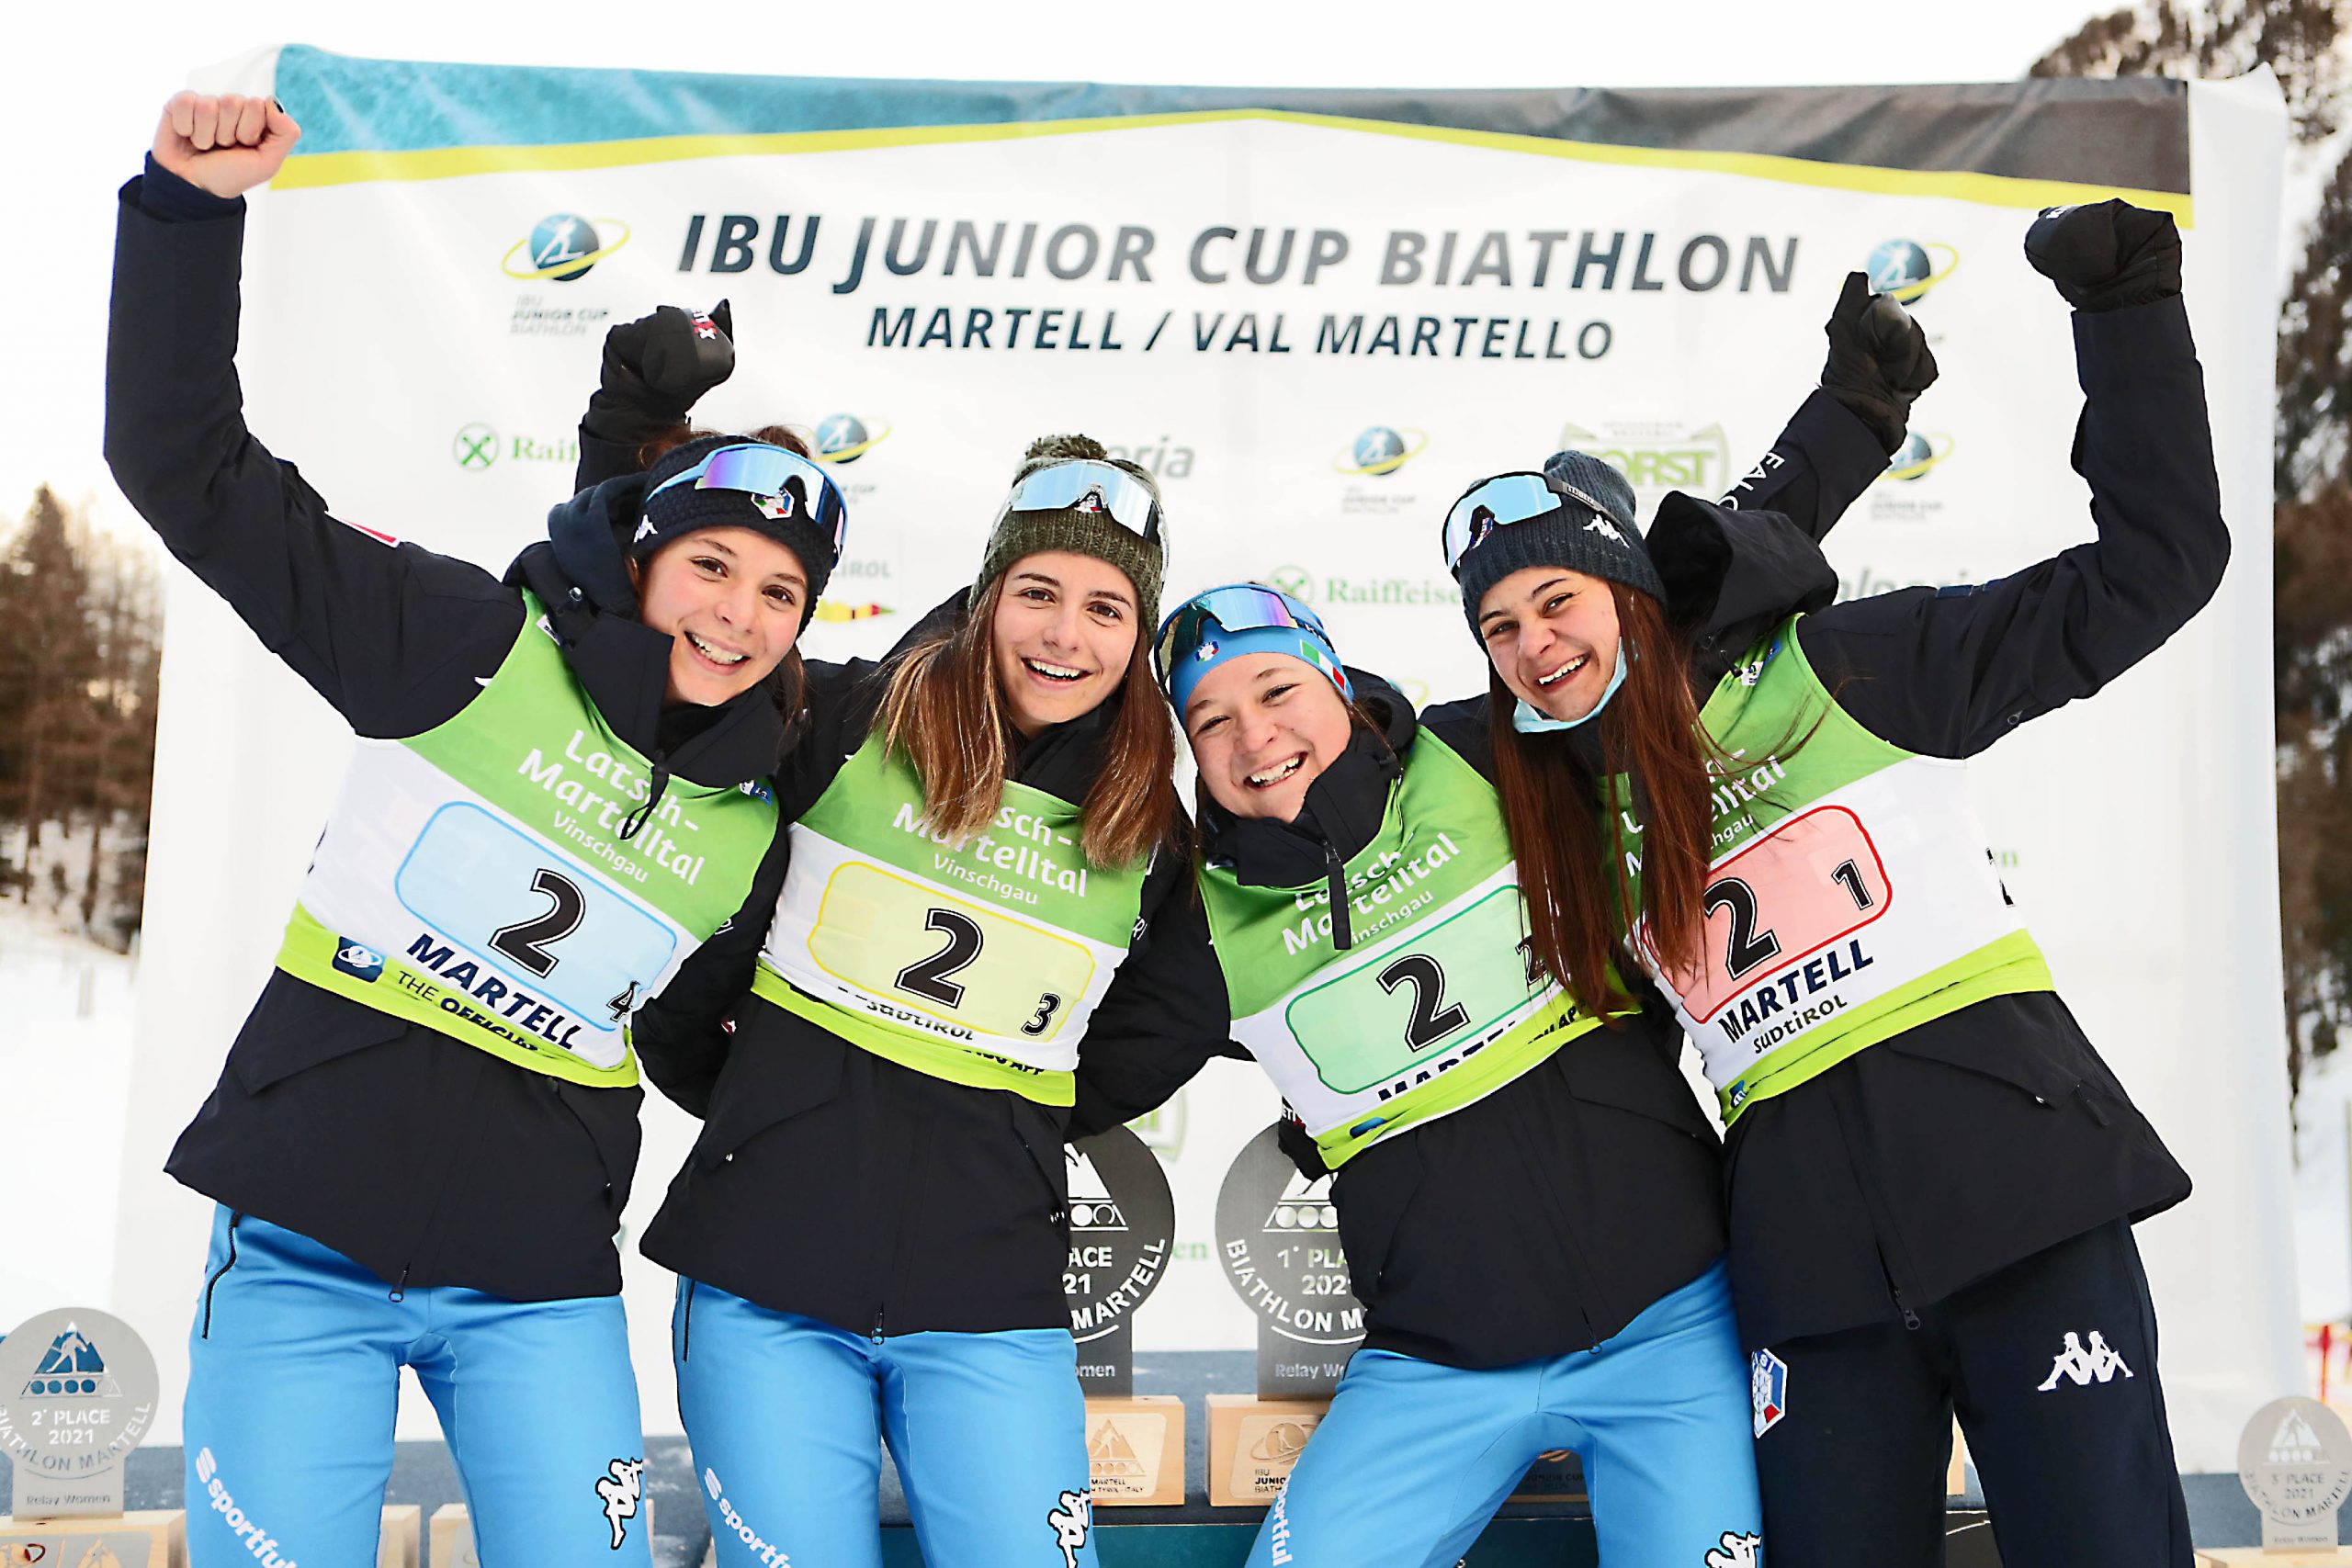 Staffetta femminile Ibu Junior cup biathlon